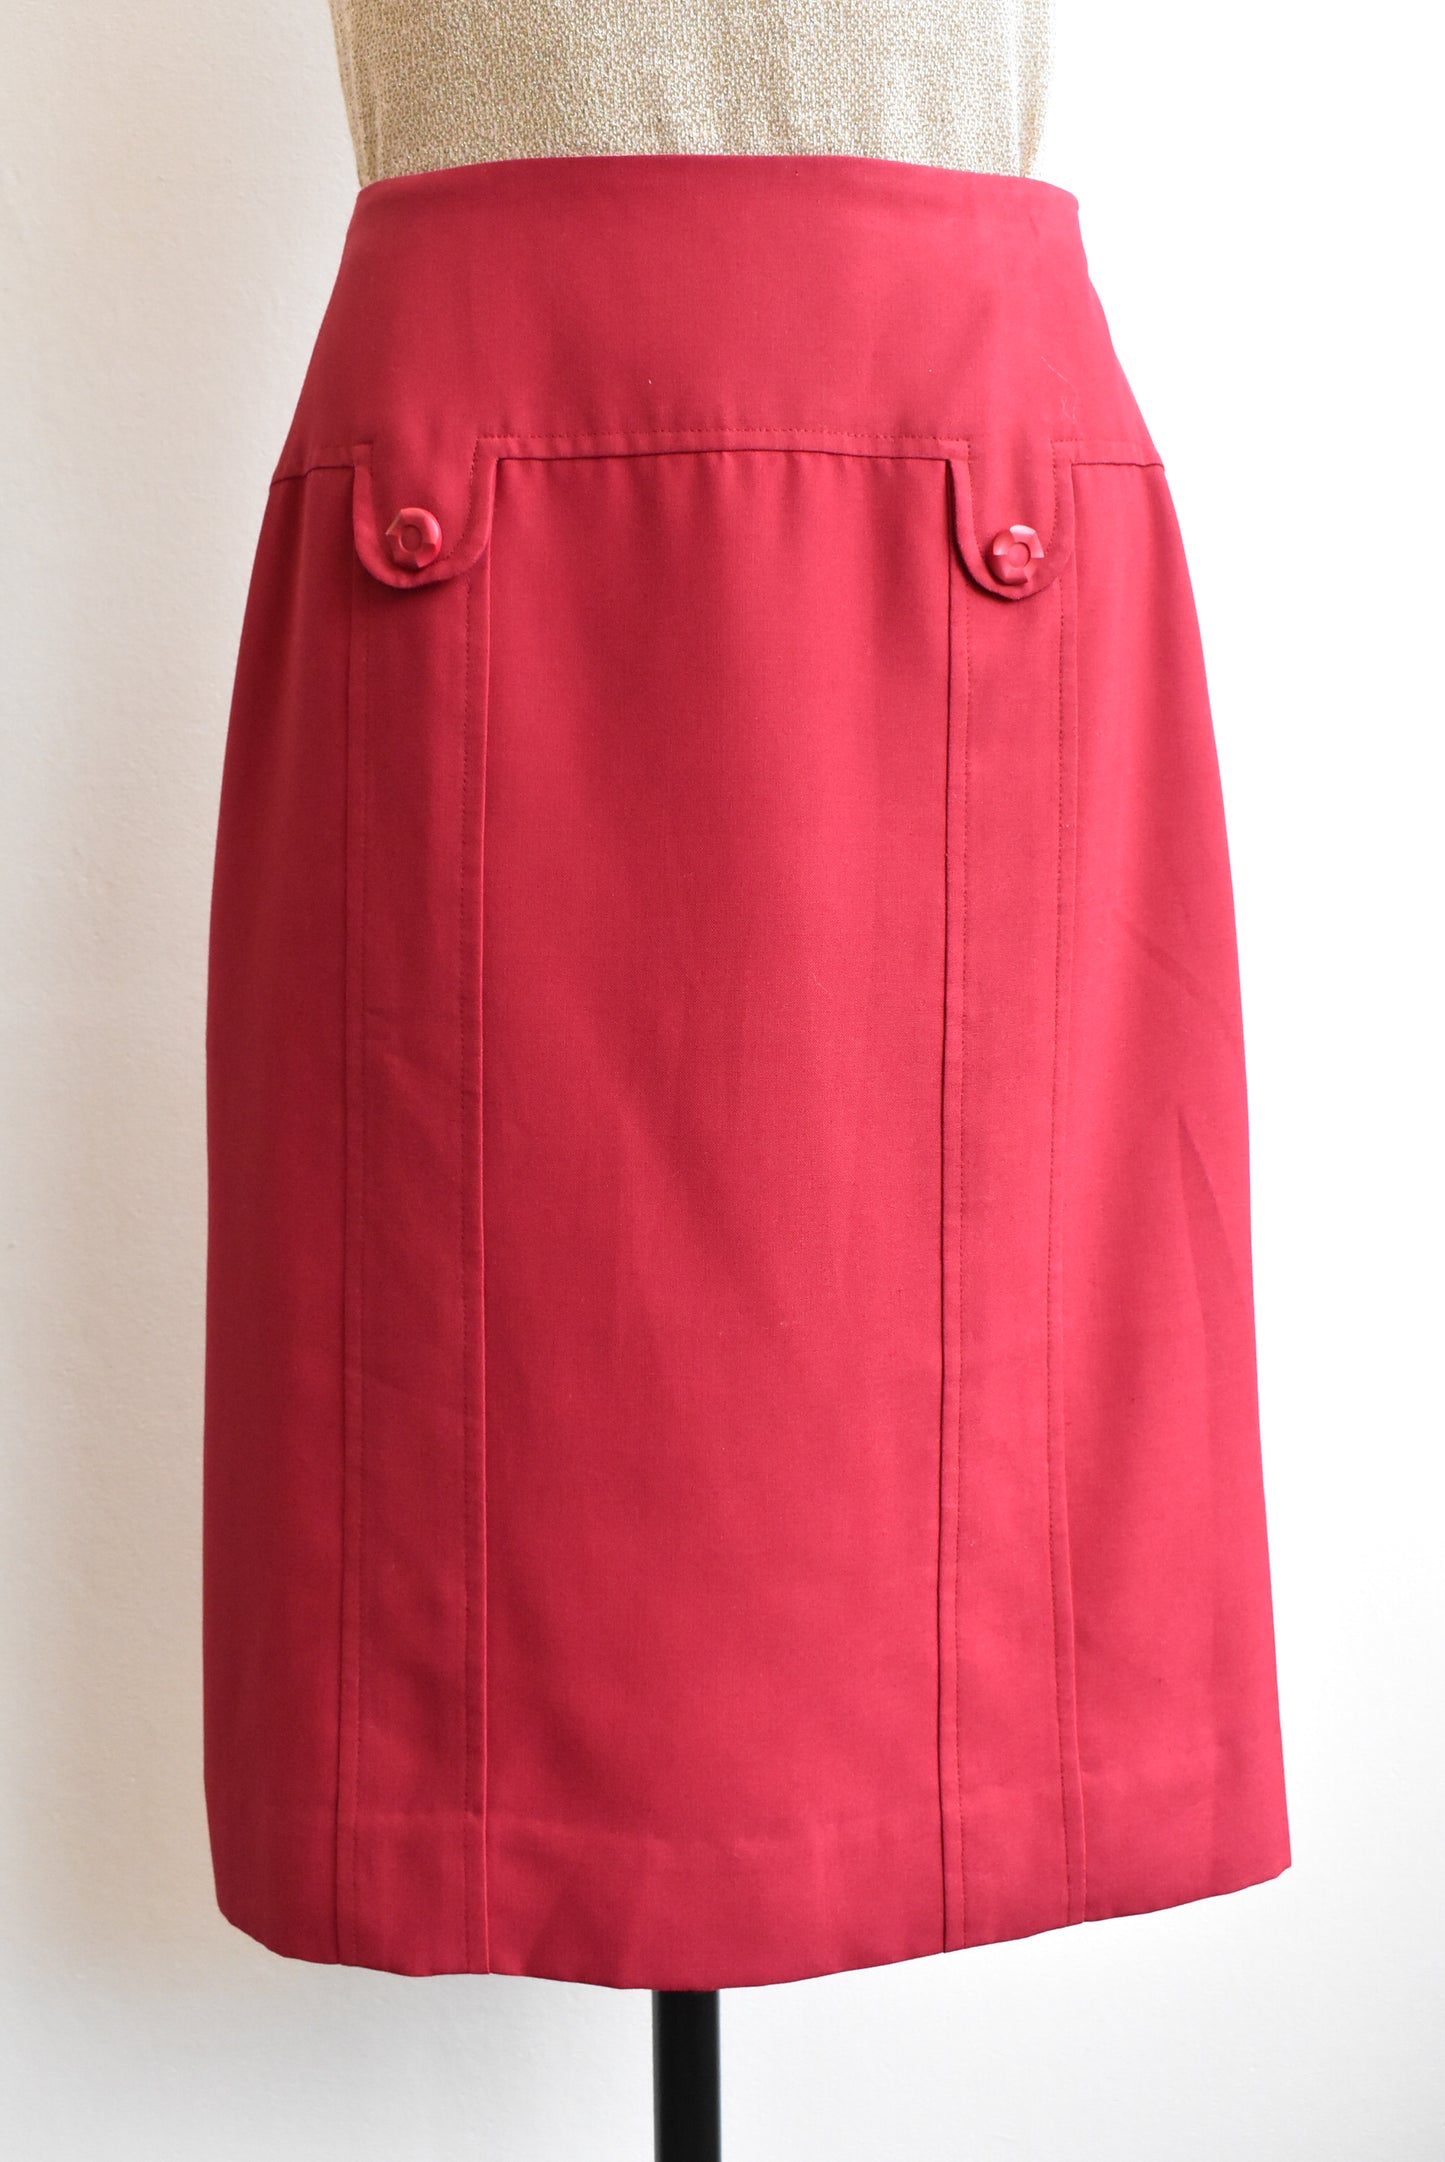 Selby retro burgundy panel pencil skirt